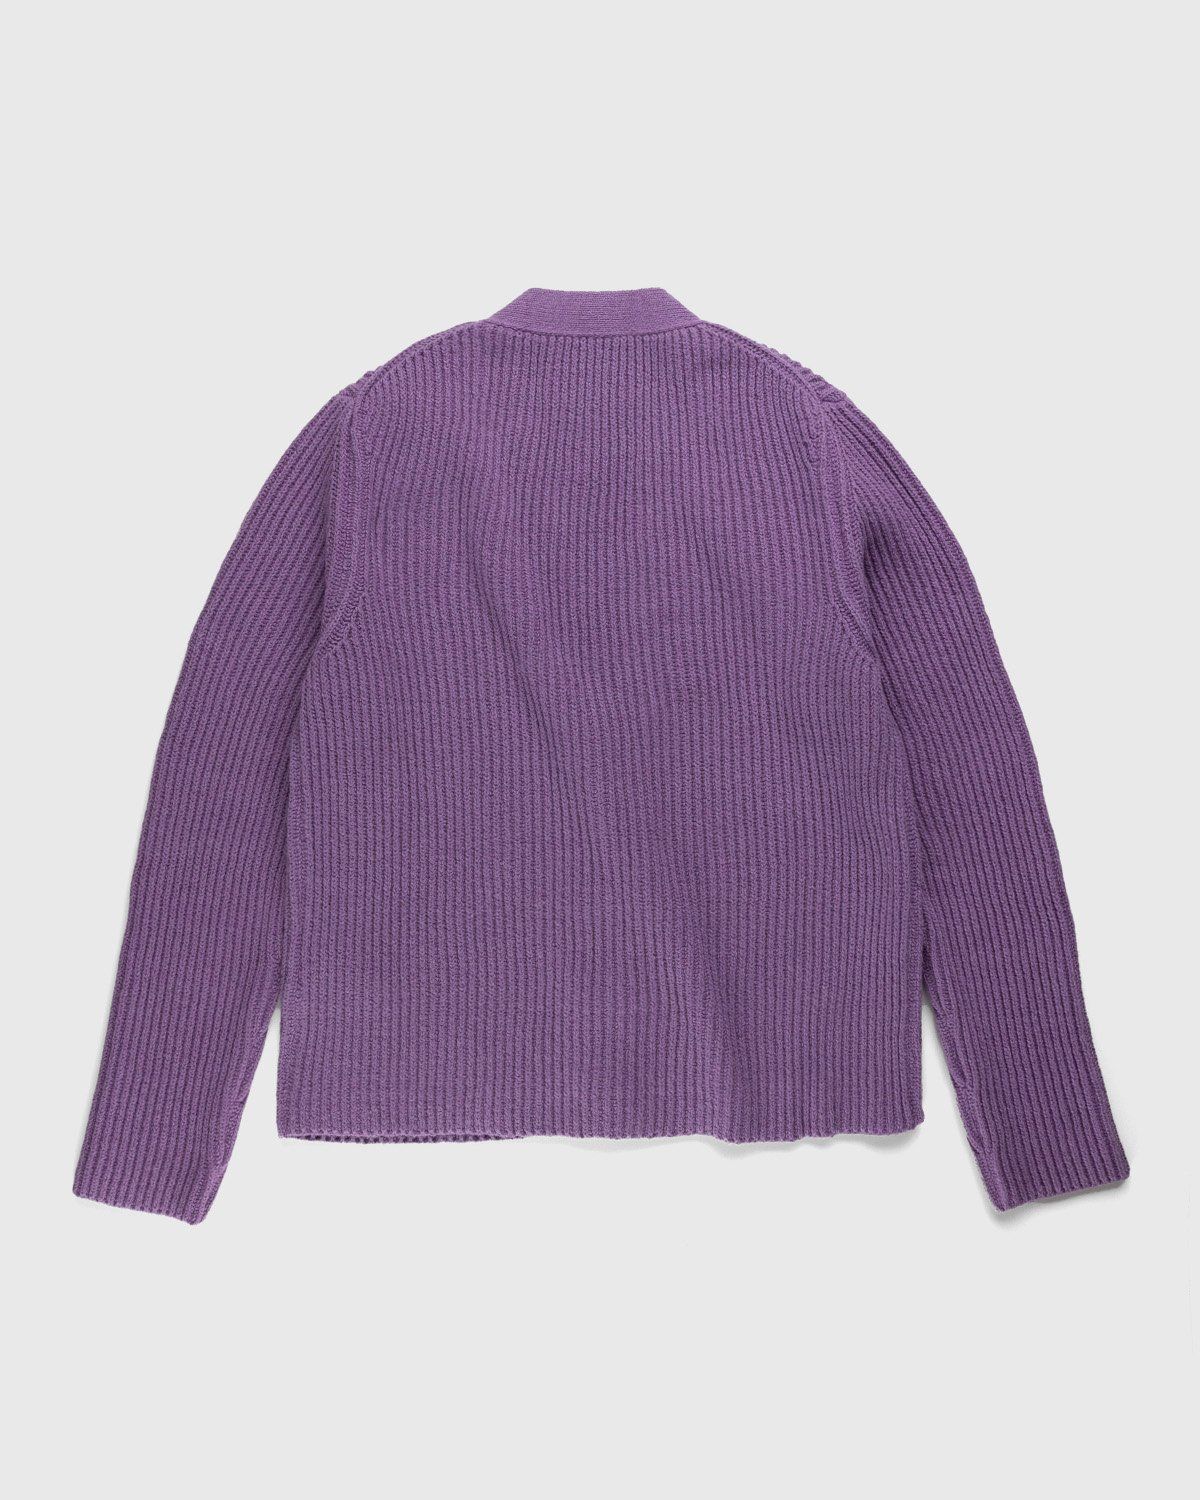 Jil Sander – Rib Knit Cardigan Medium Purple - Cardigans - Purple - Image 2